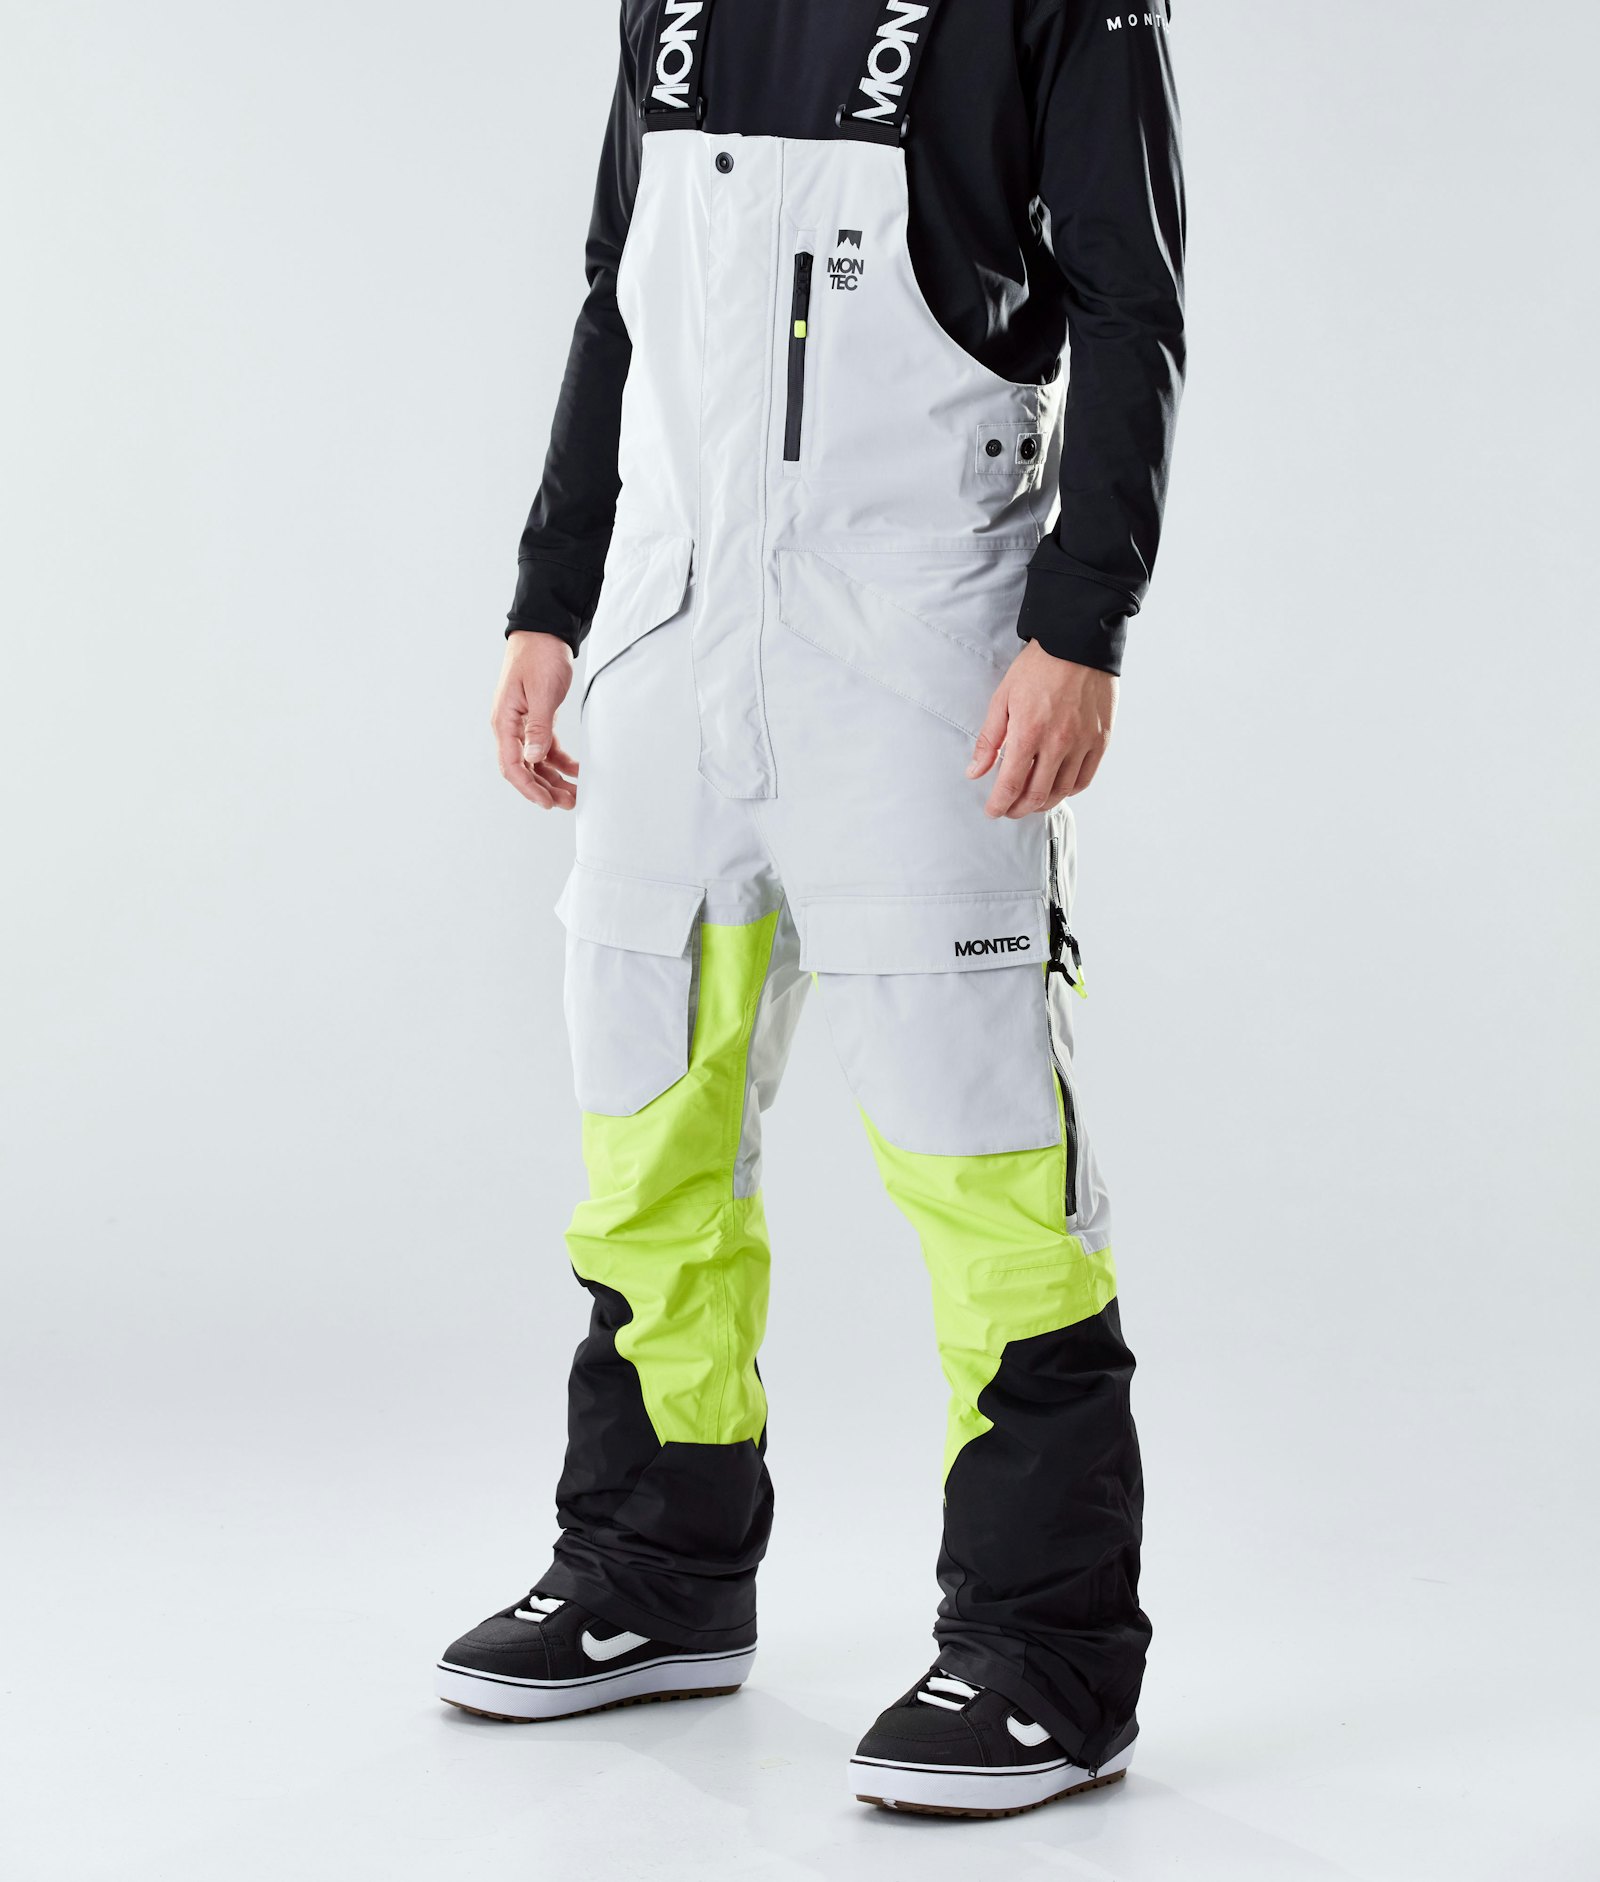 Fawk 2020 Snowboard Pants Men Light Grey/Neon Yellow/Black Renewed, Image 1 of 6